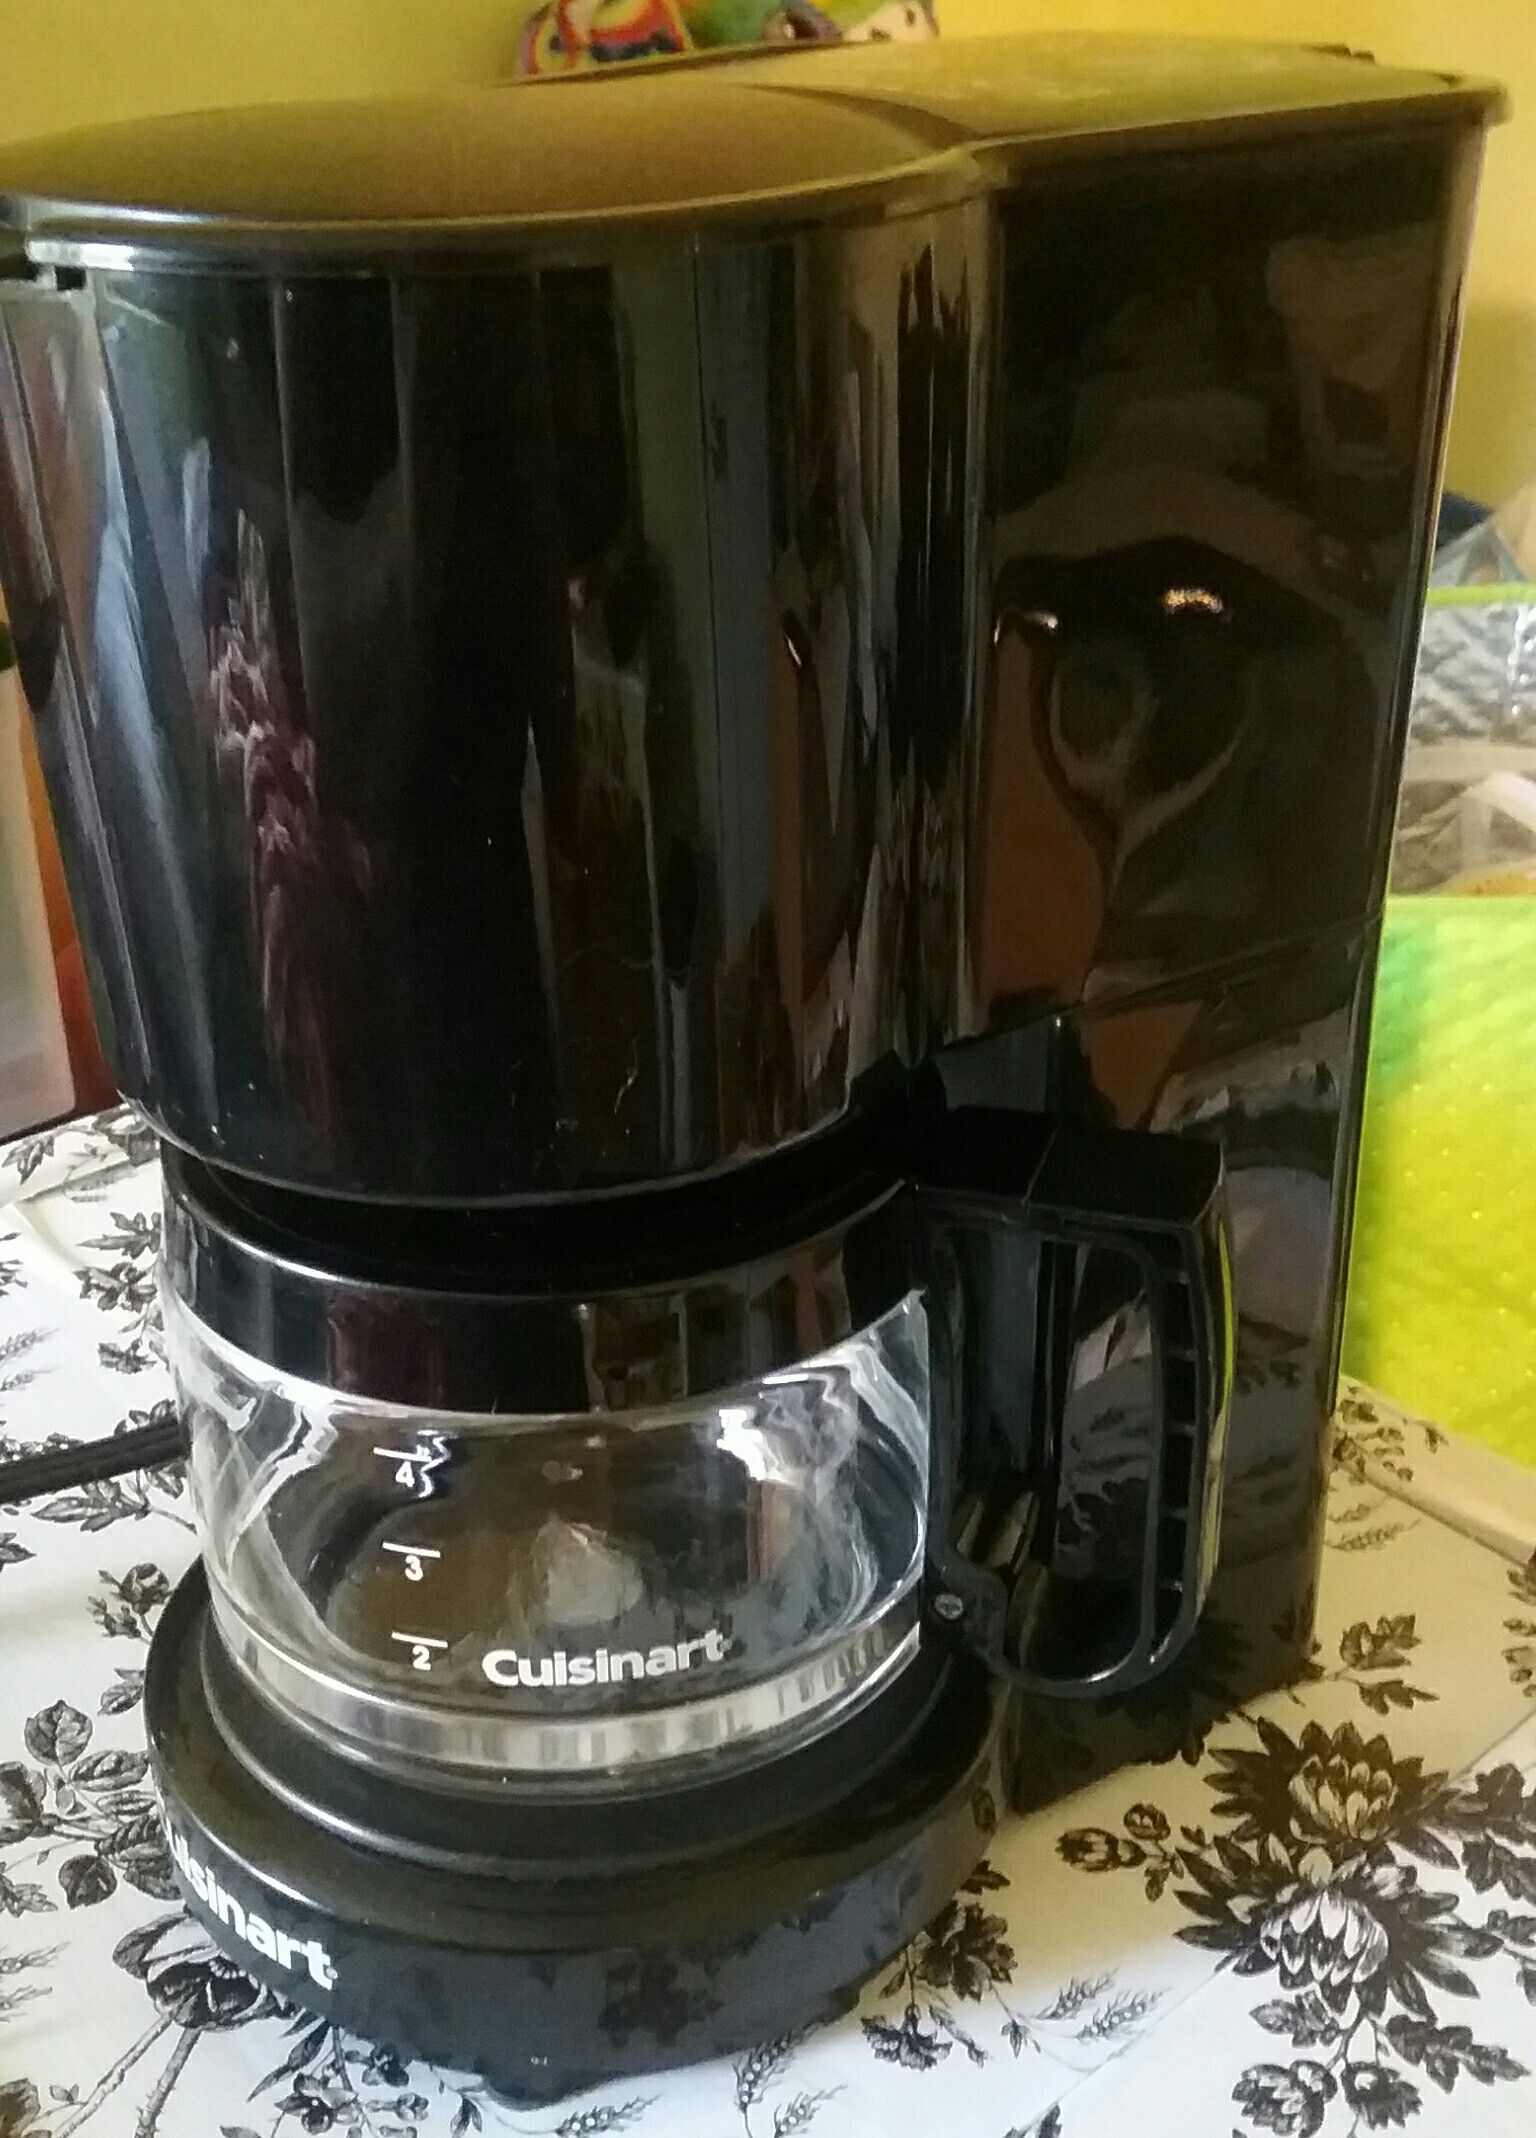 Cuisinart Coffee Maker $9